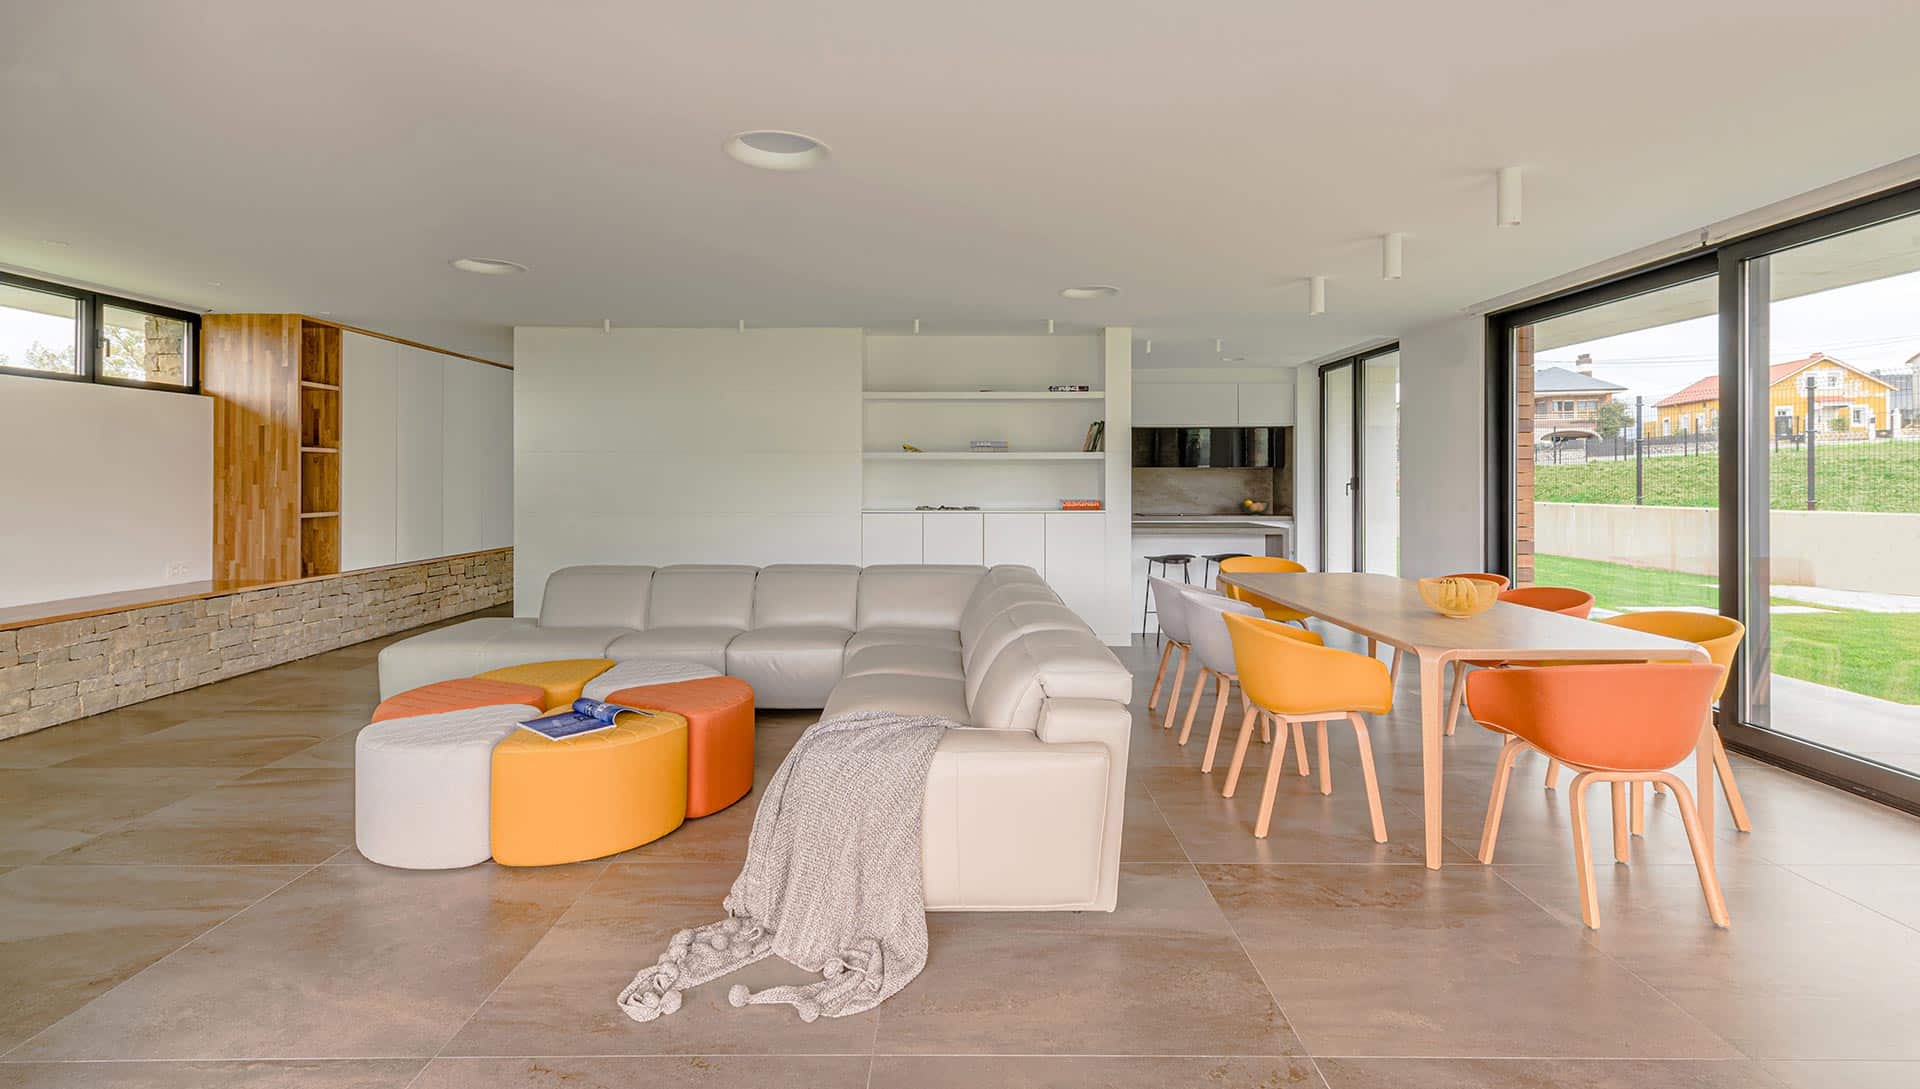 Salón comedor de casa moderna diseñada por Moah Arquitectos en Pontejos